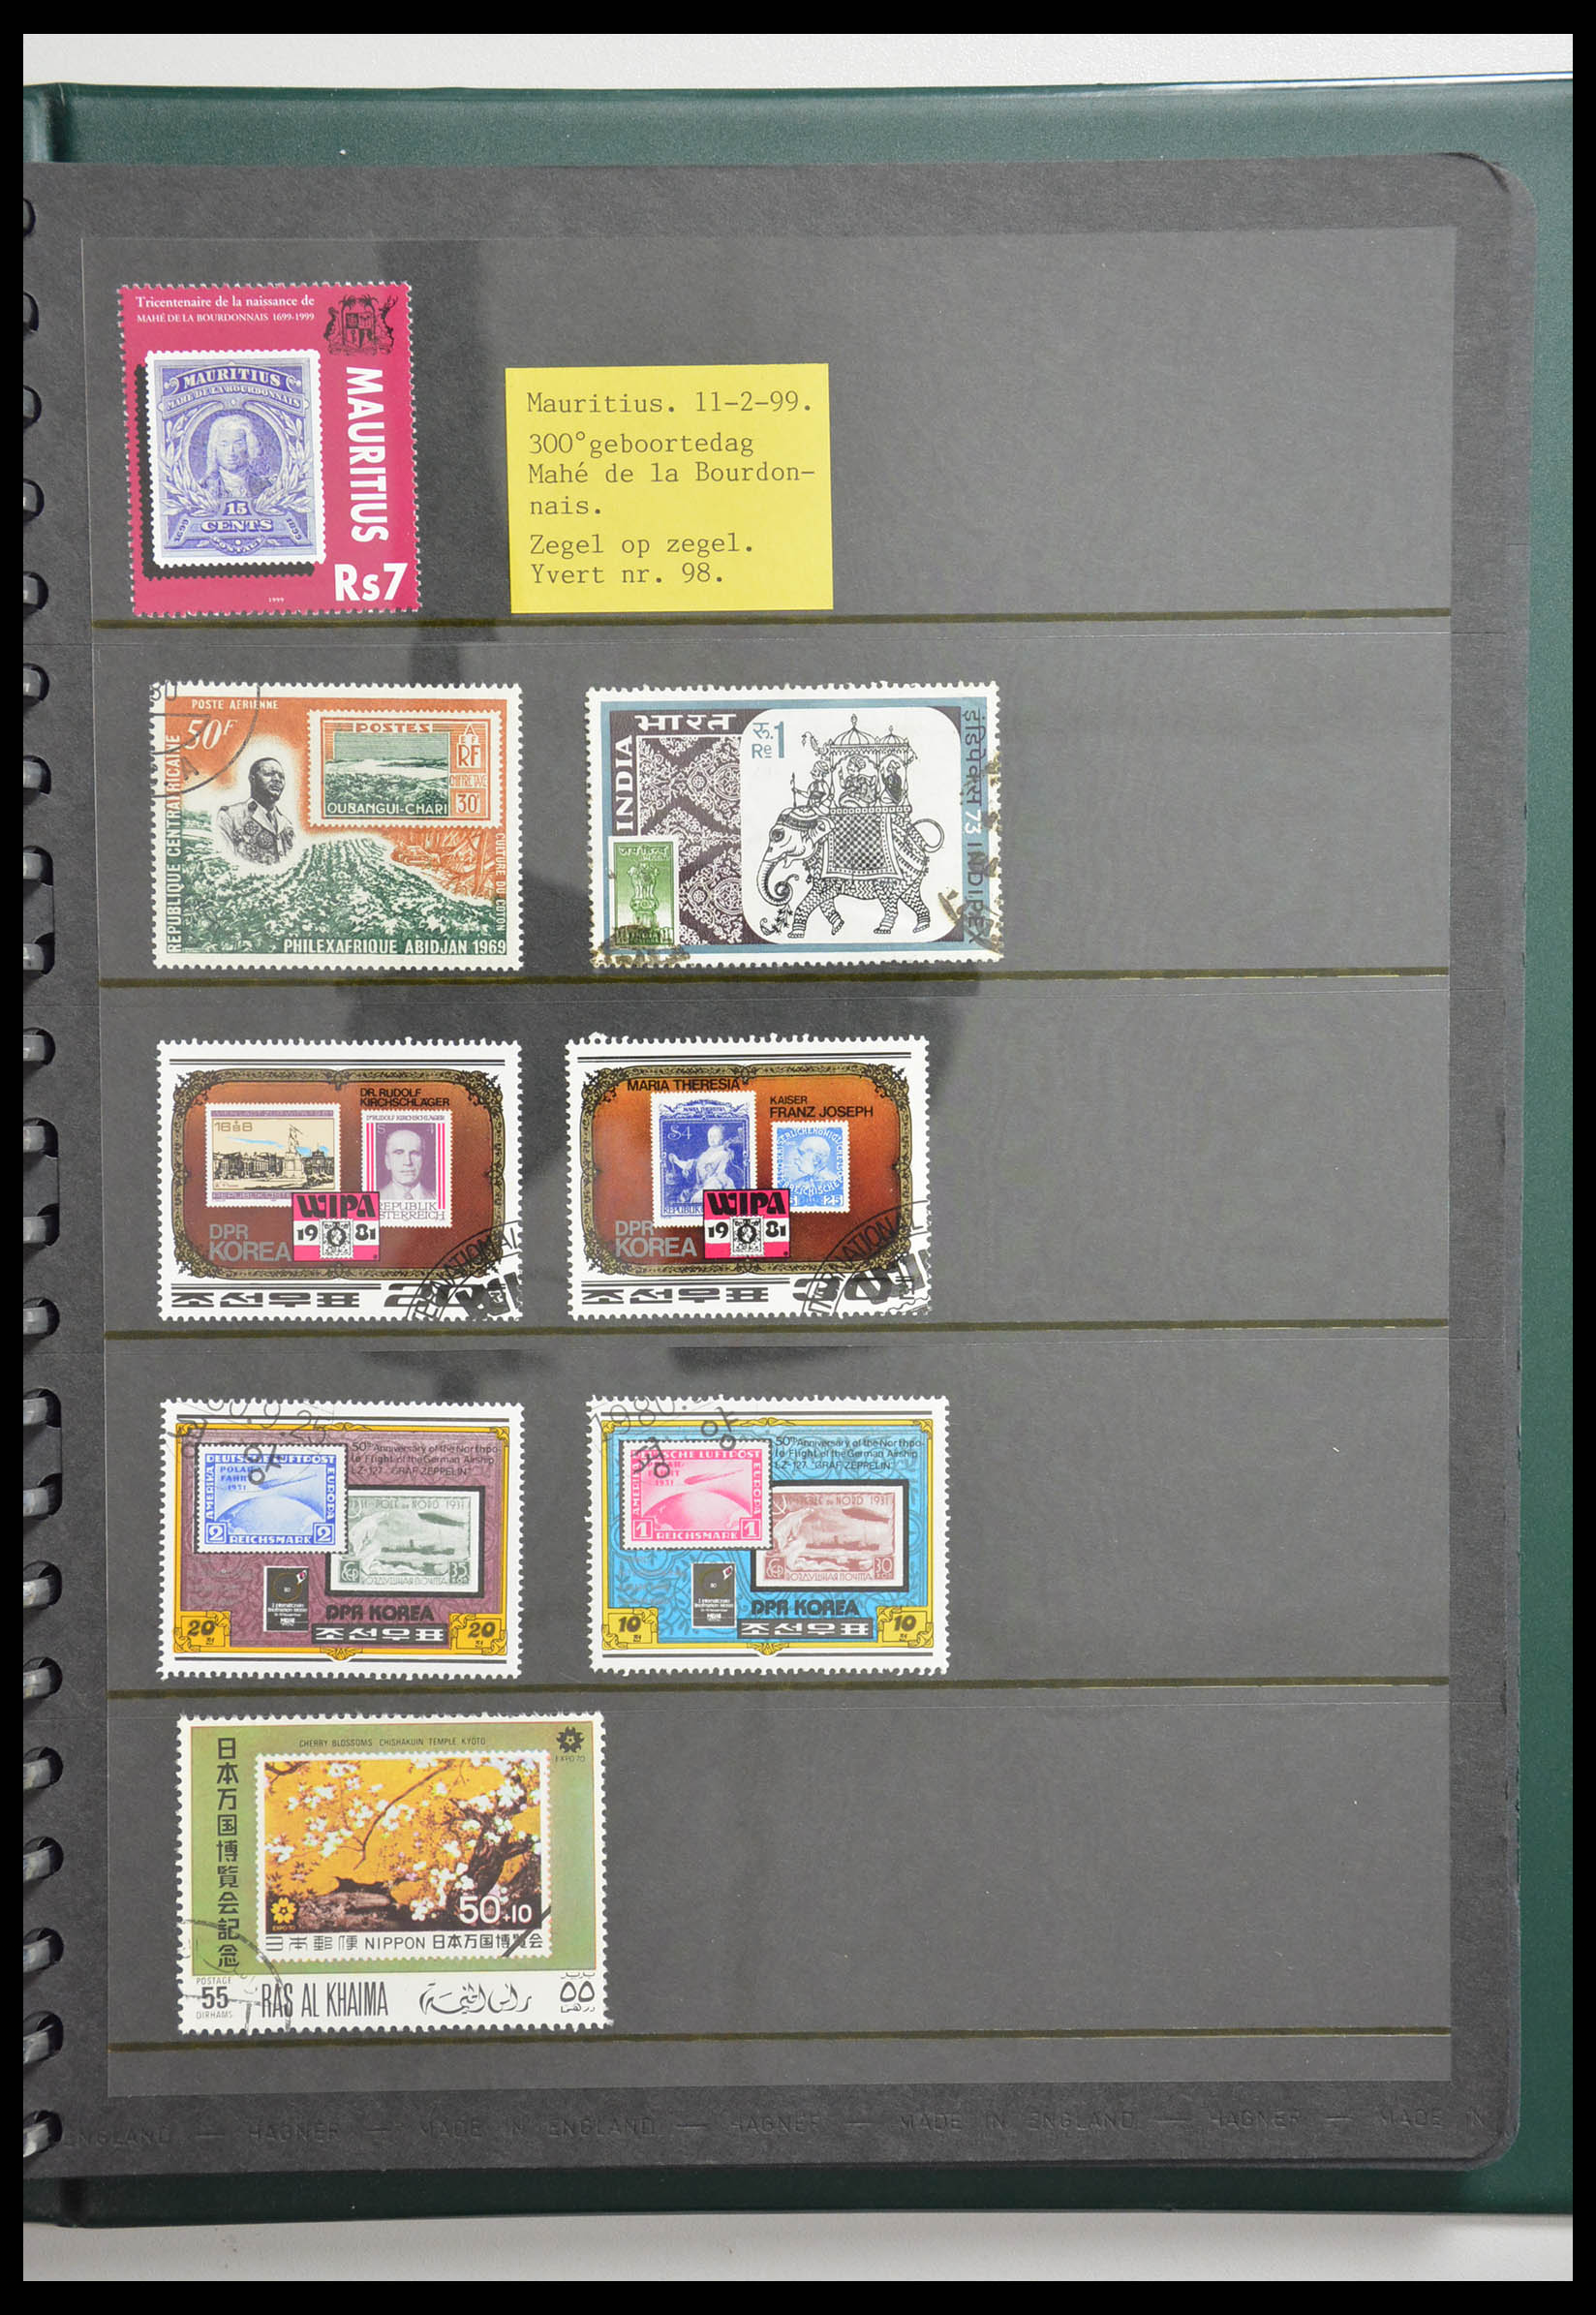 28337 030 - 28337 Postzegel op postzegel 1840-2001.